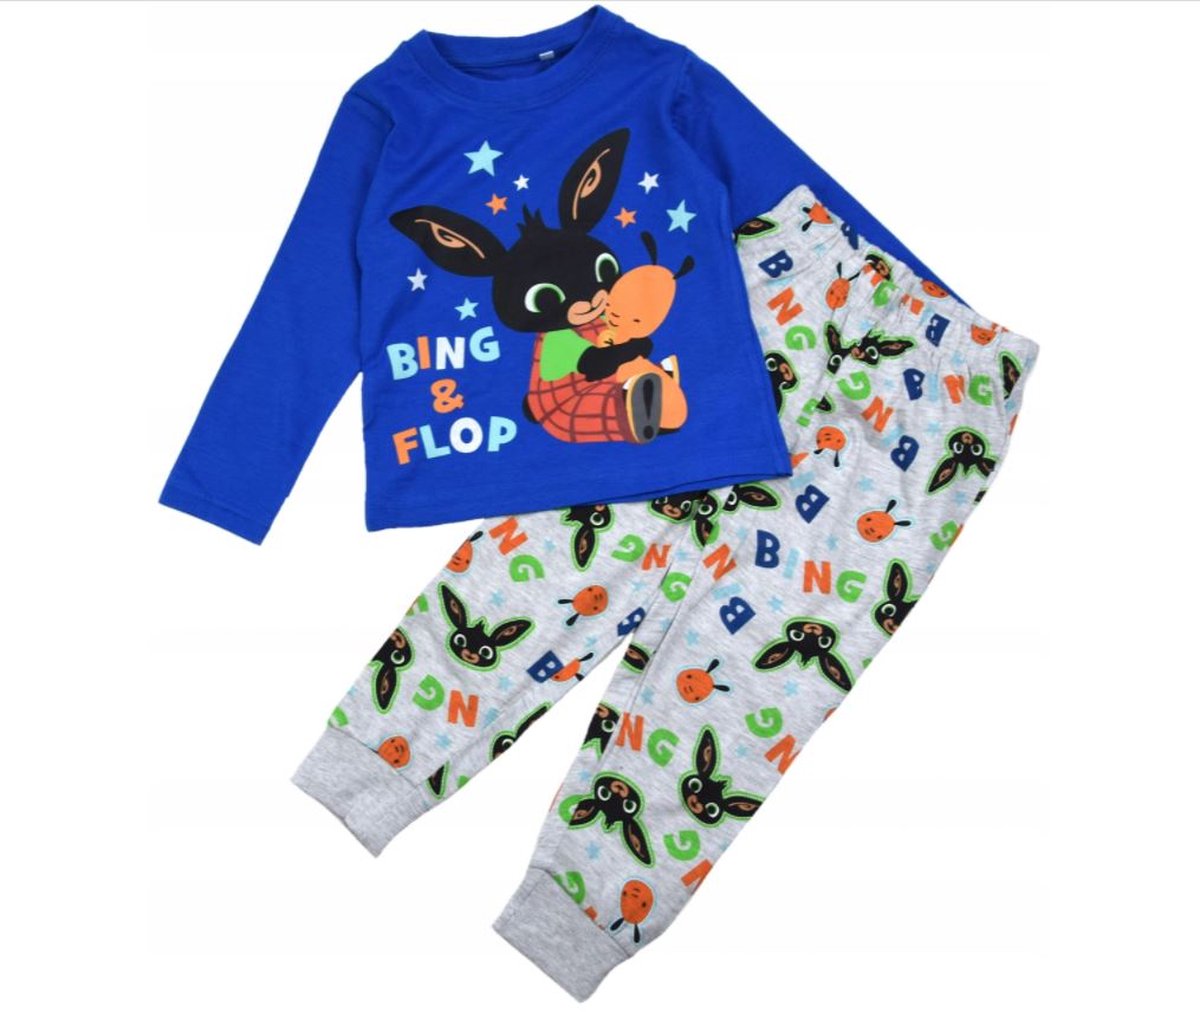 Bing pyjama - maat 110 - Bing Bunny pyjamaset - blauw